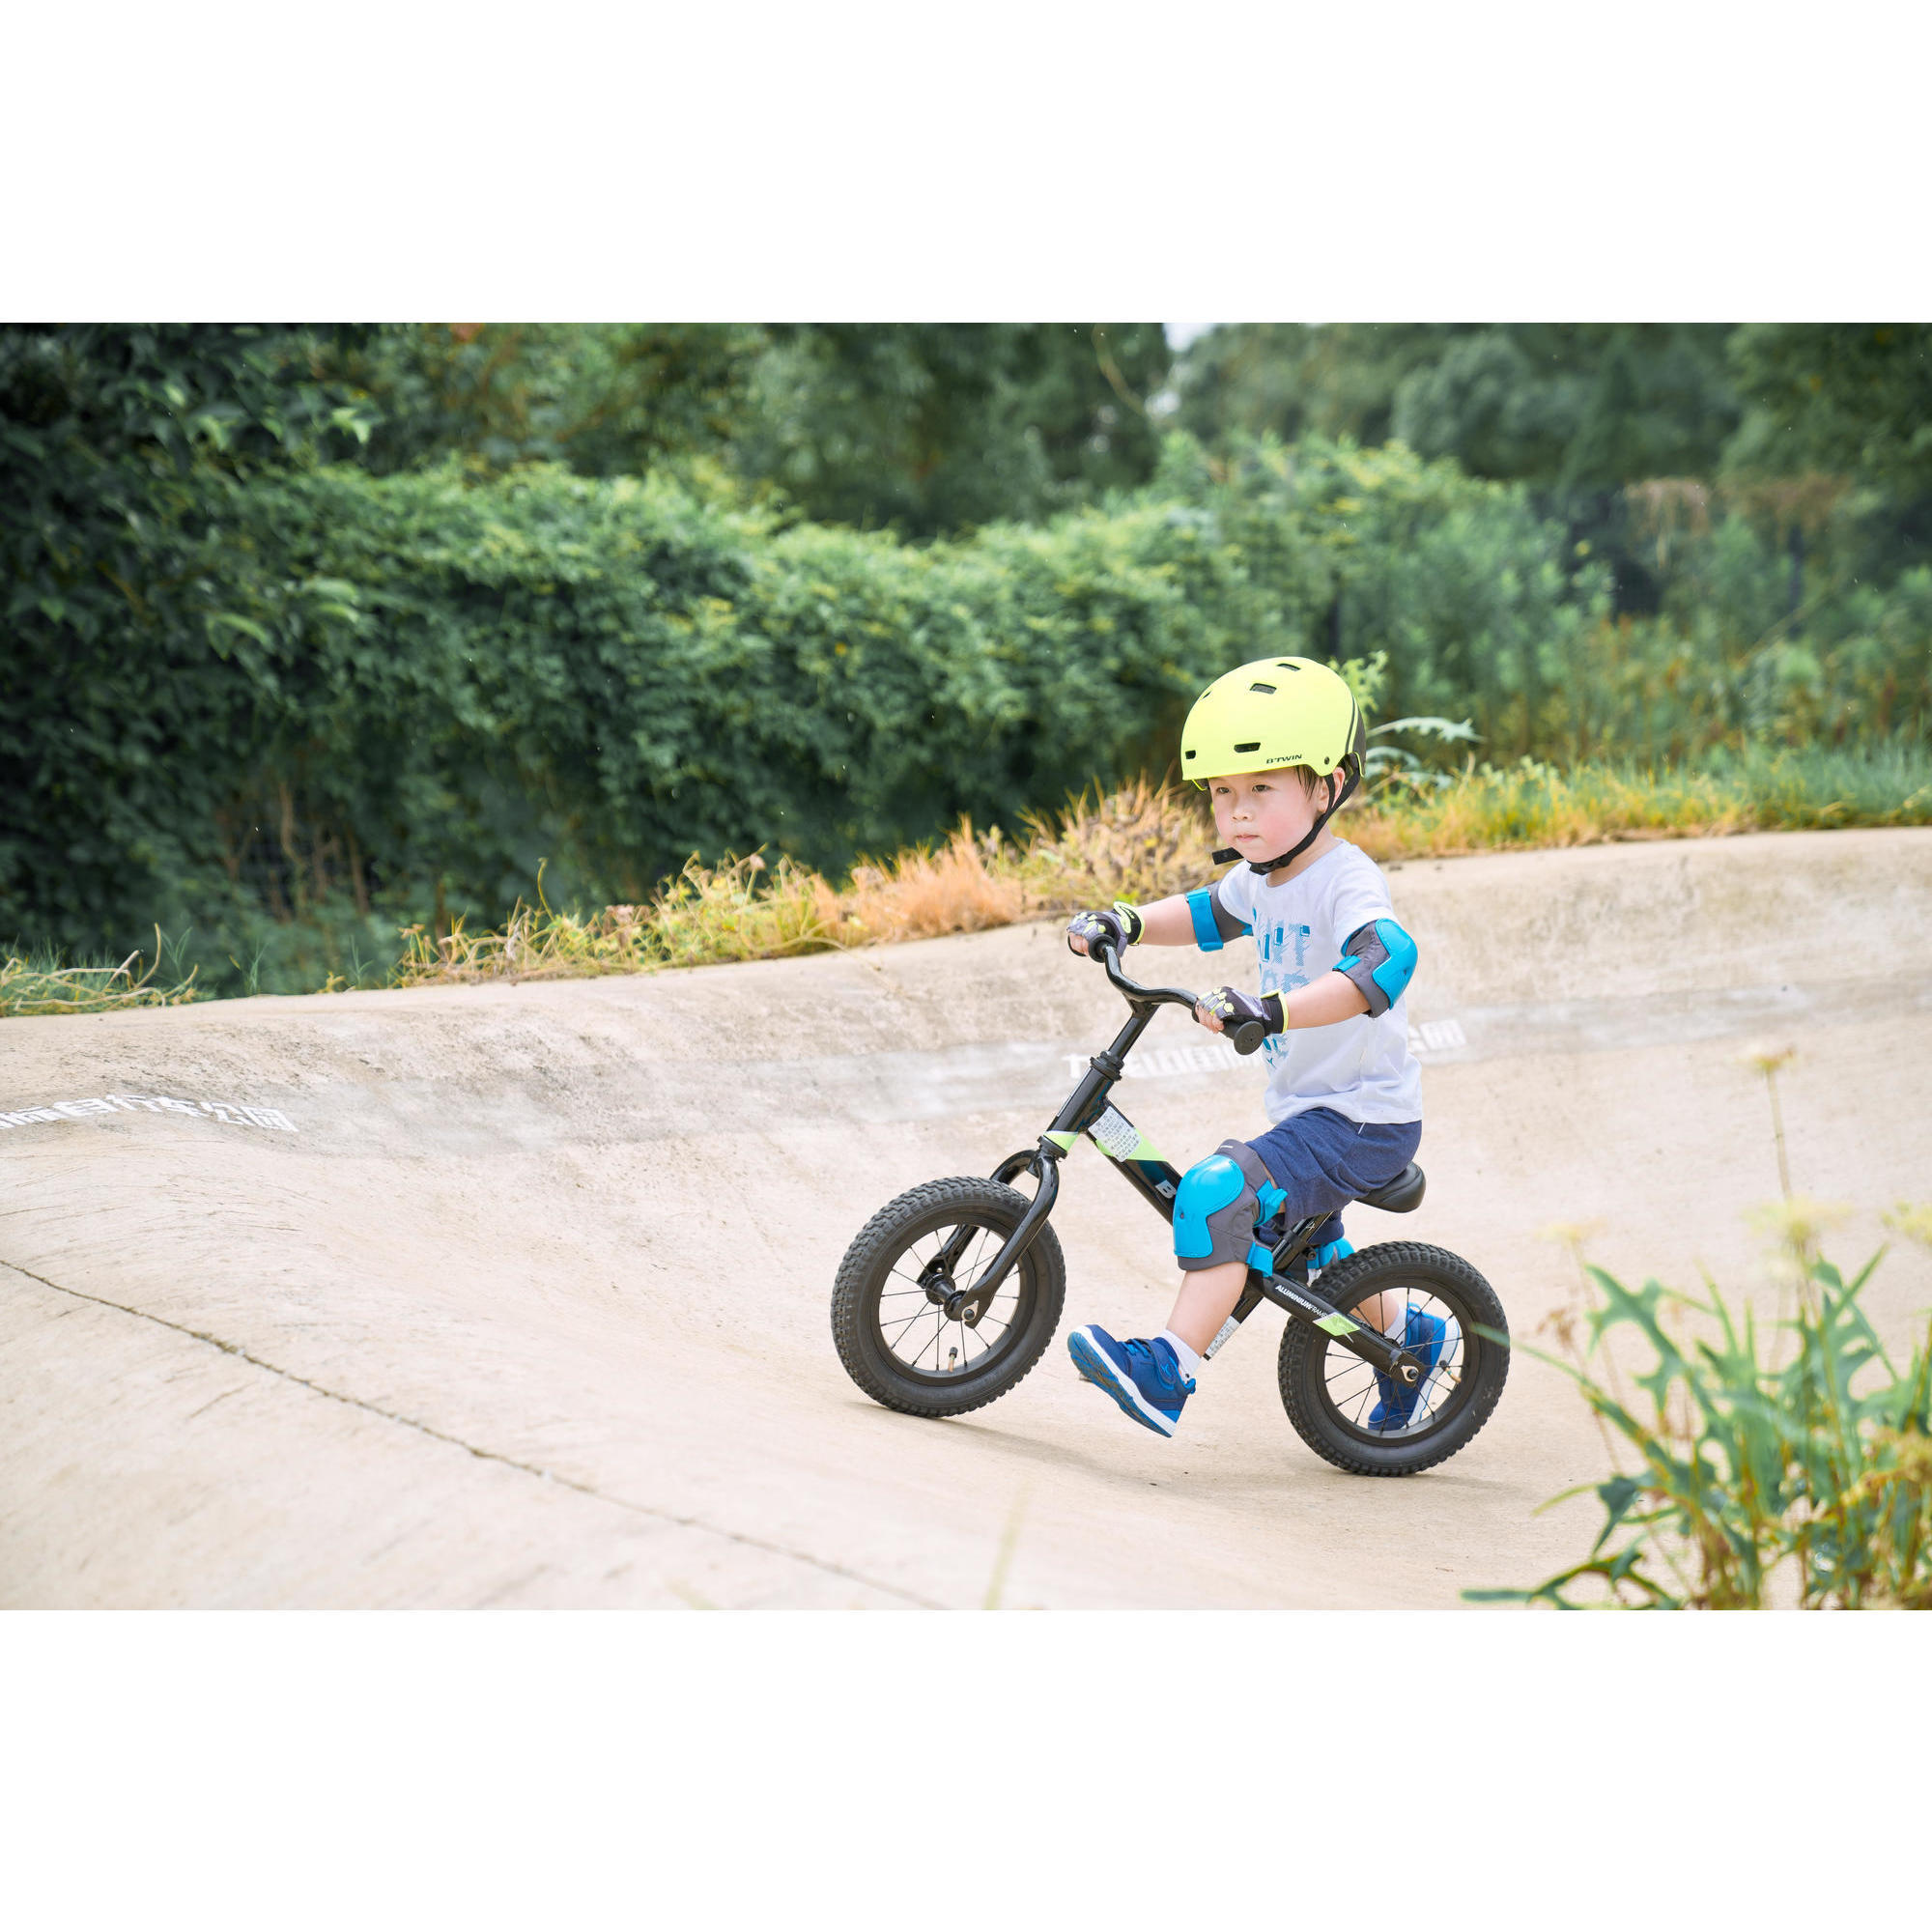 kid riding balance bike